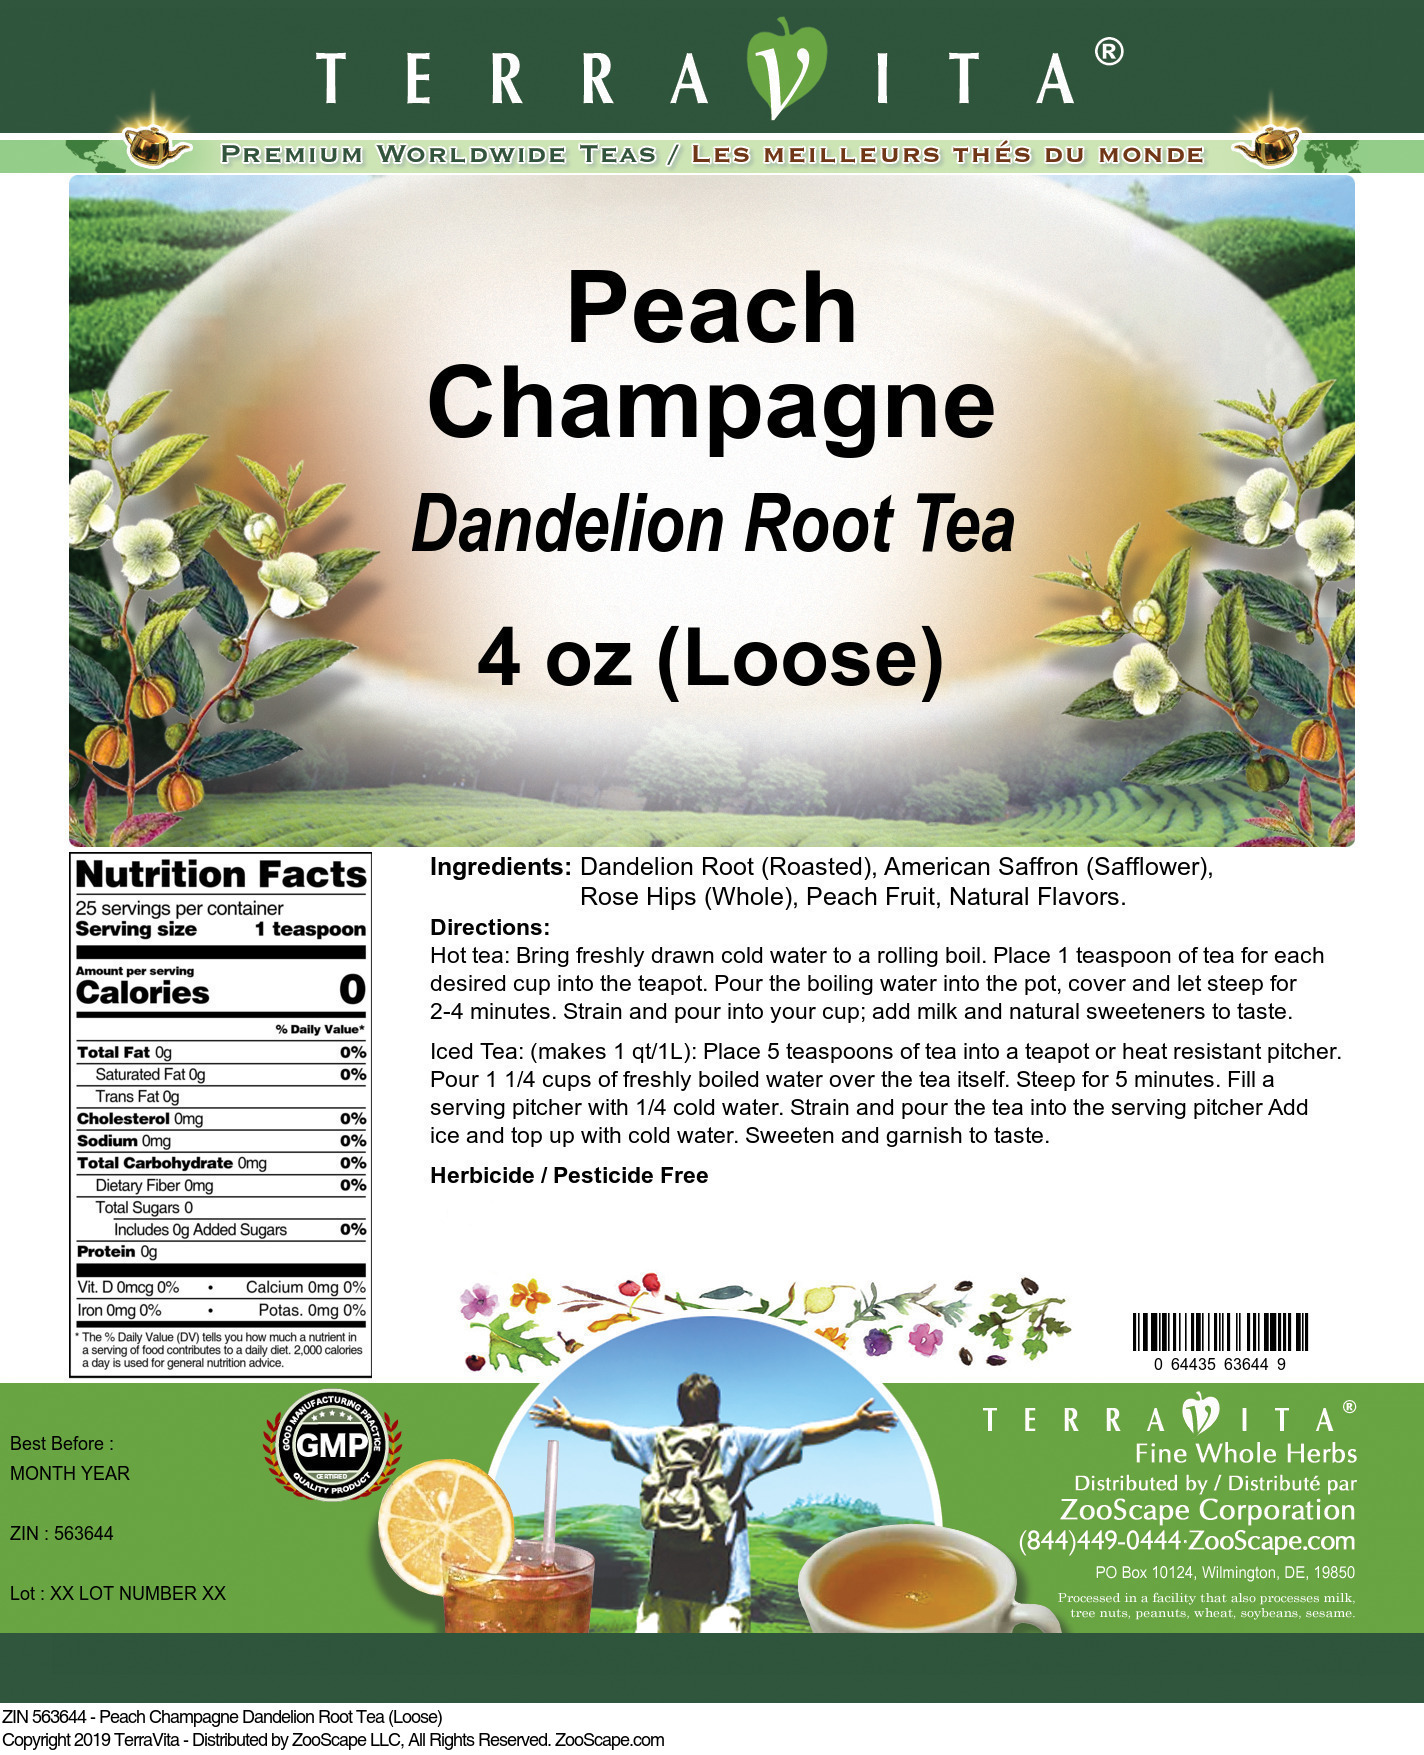 Peach Champagne Dandelion Root Tea (Loose) - Label